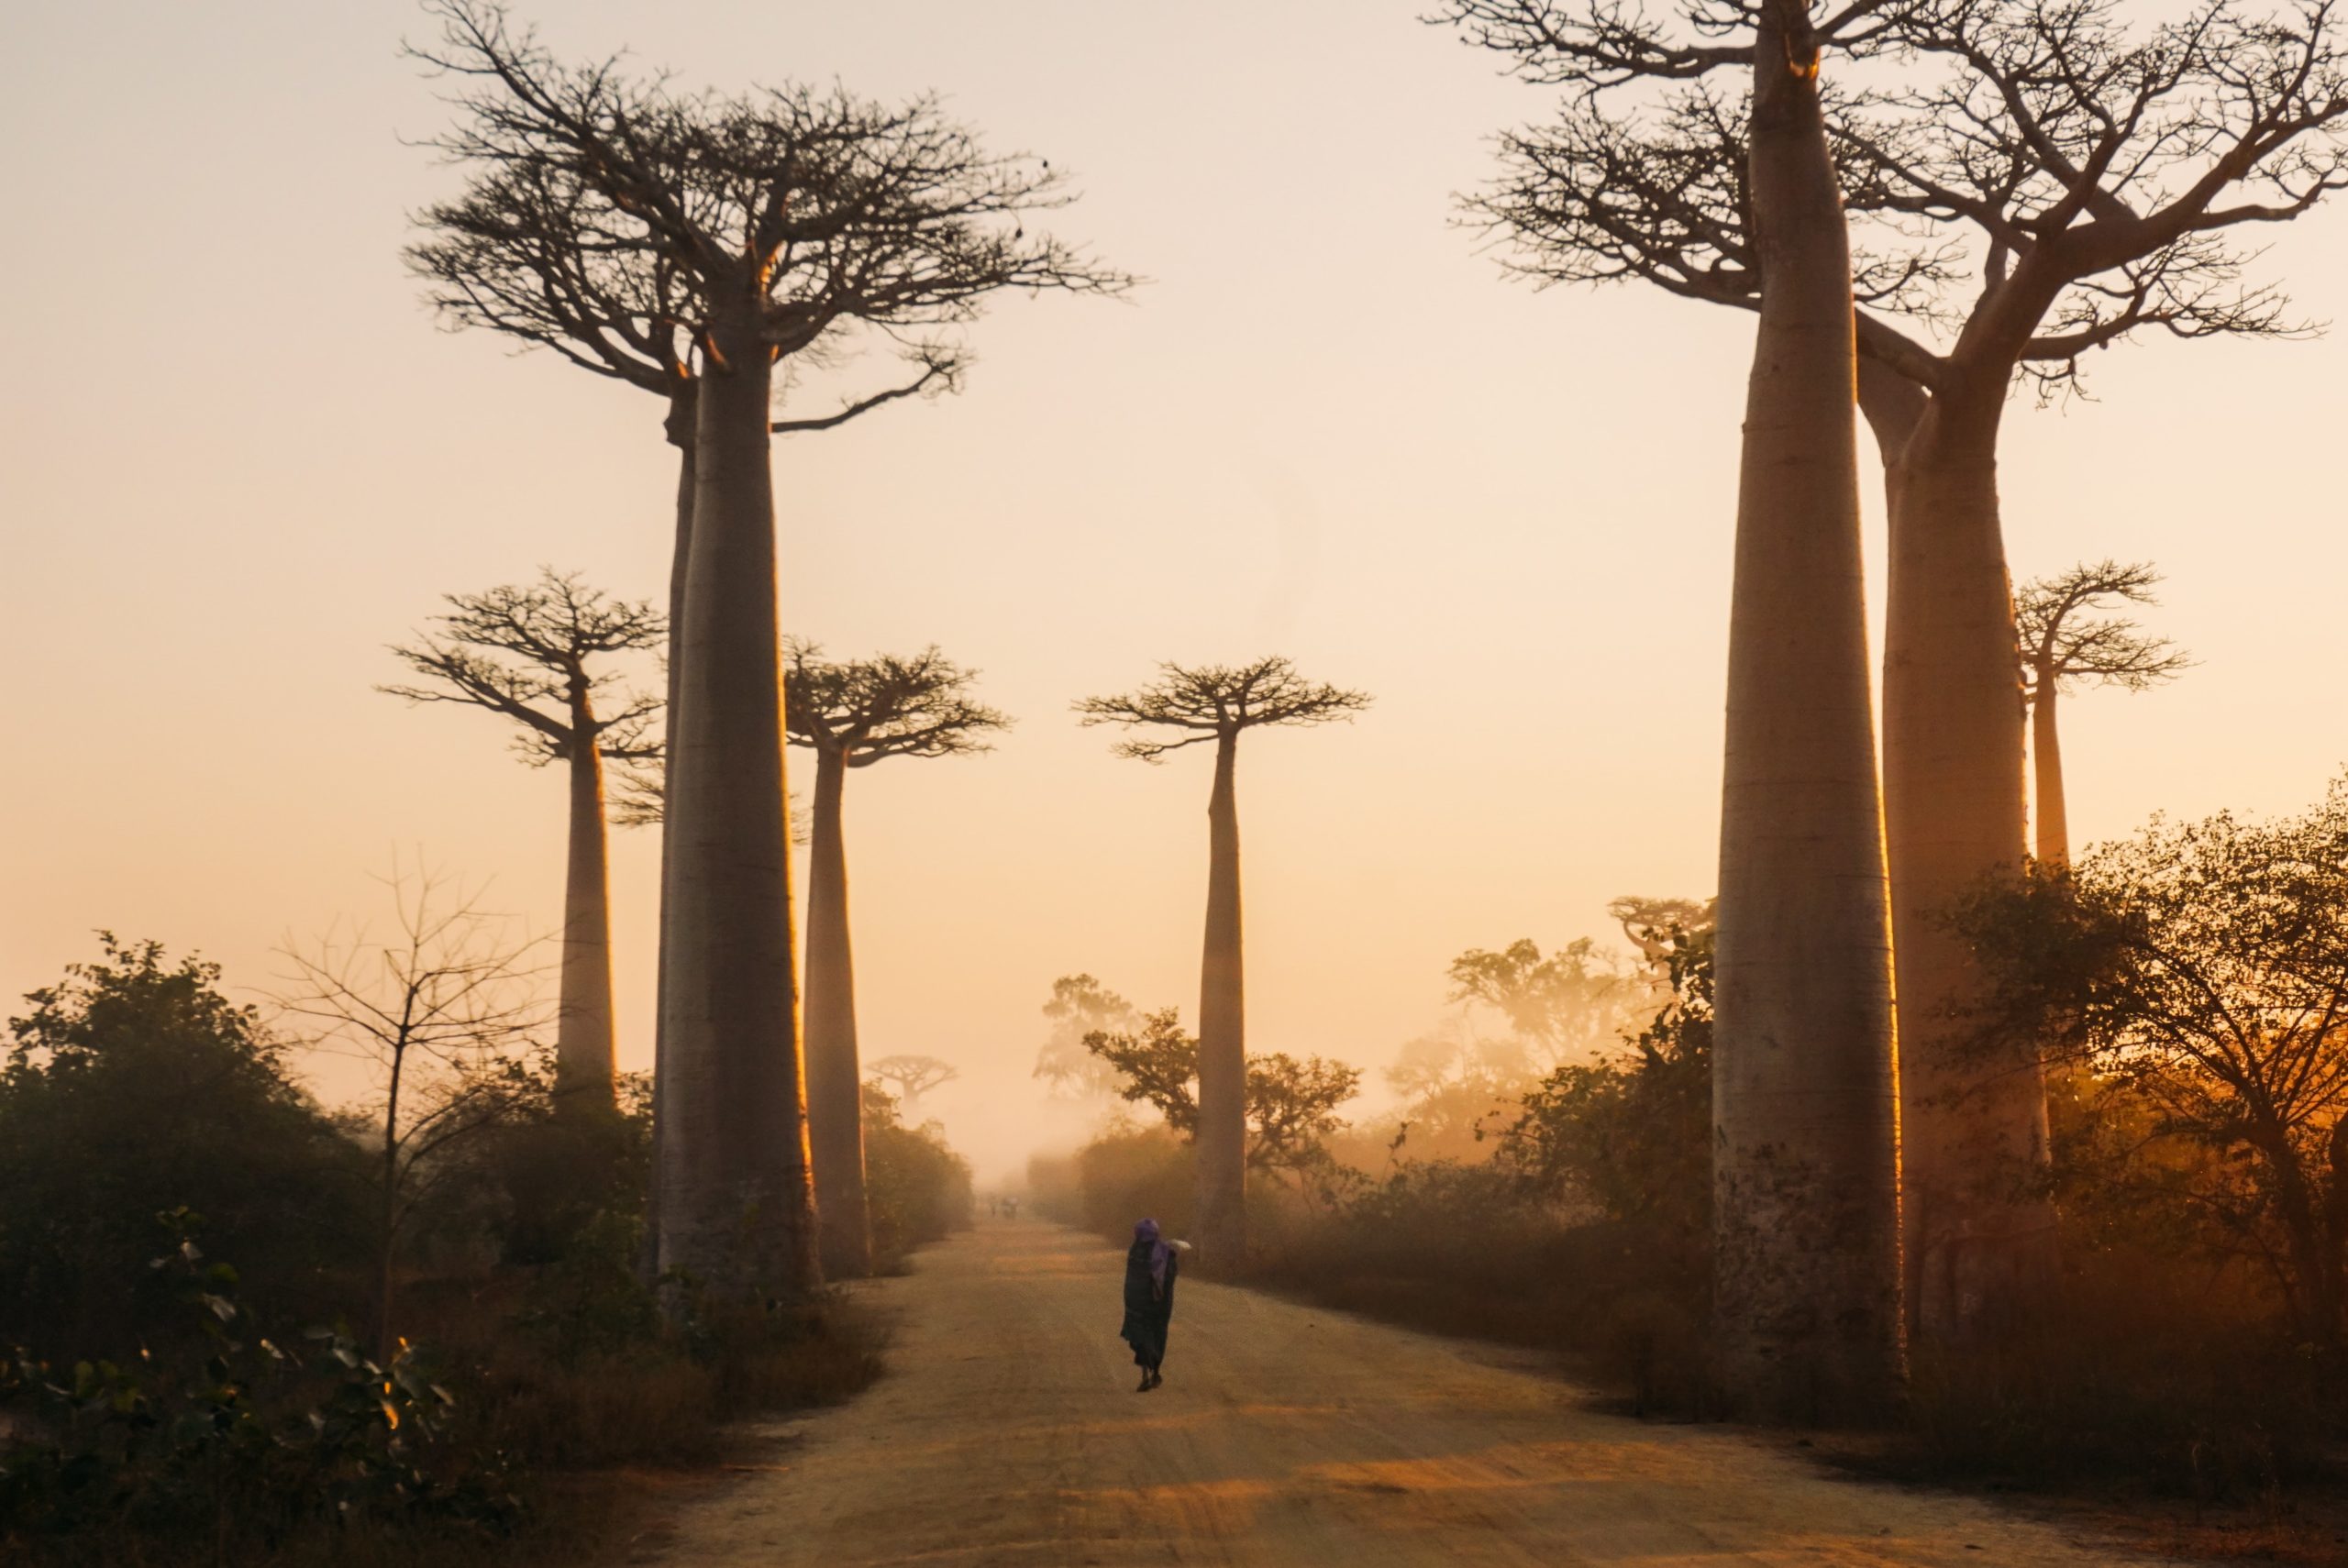 Person walking past baobab trees